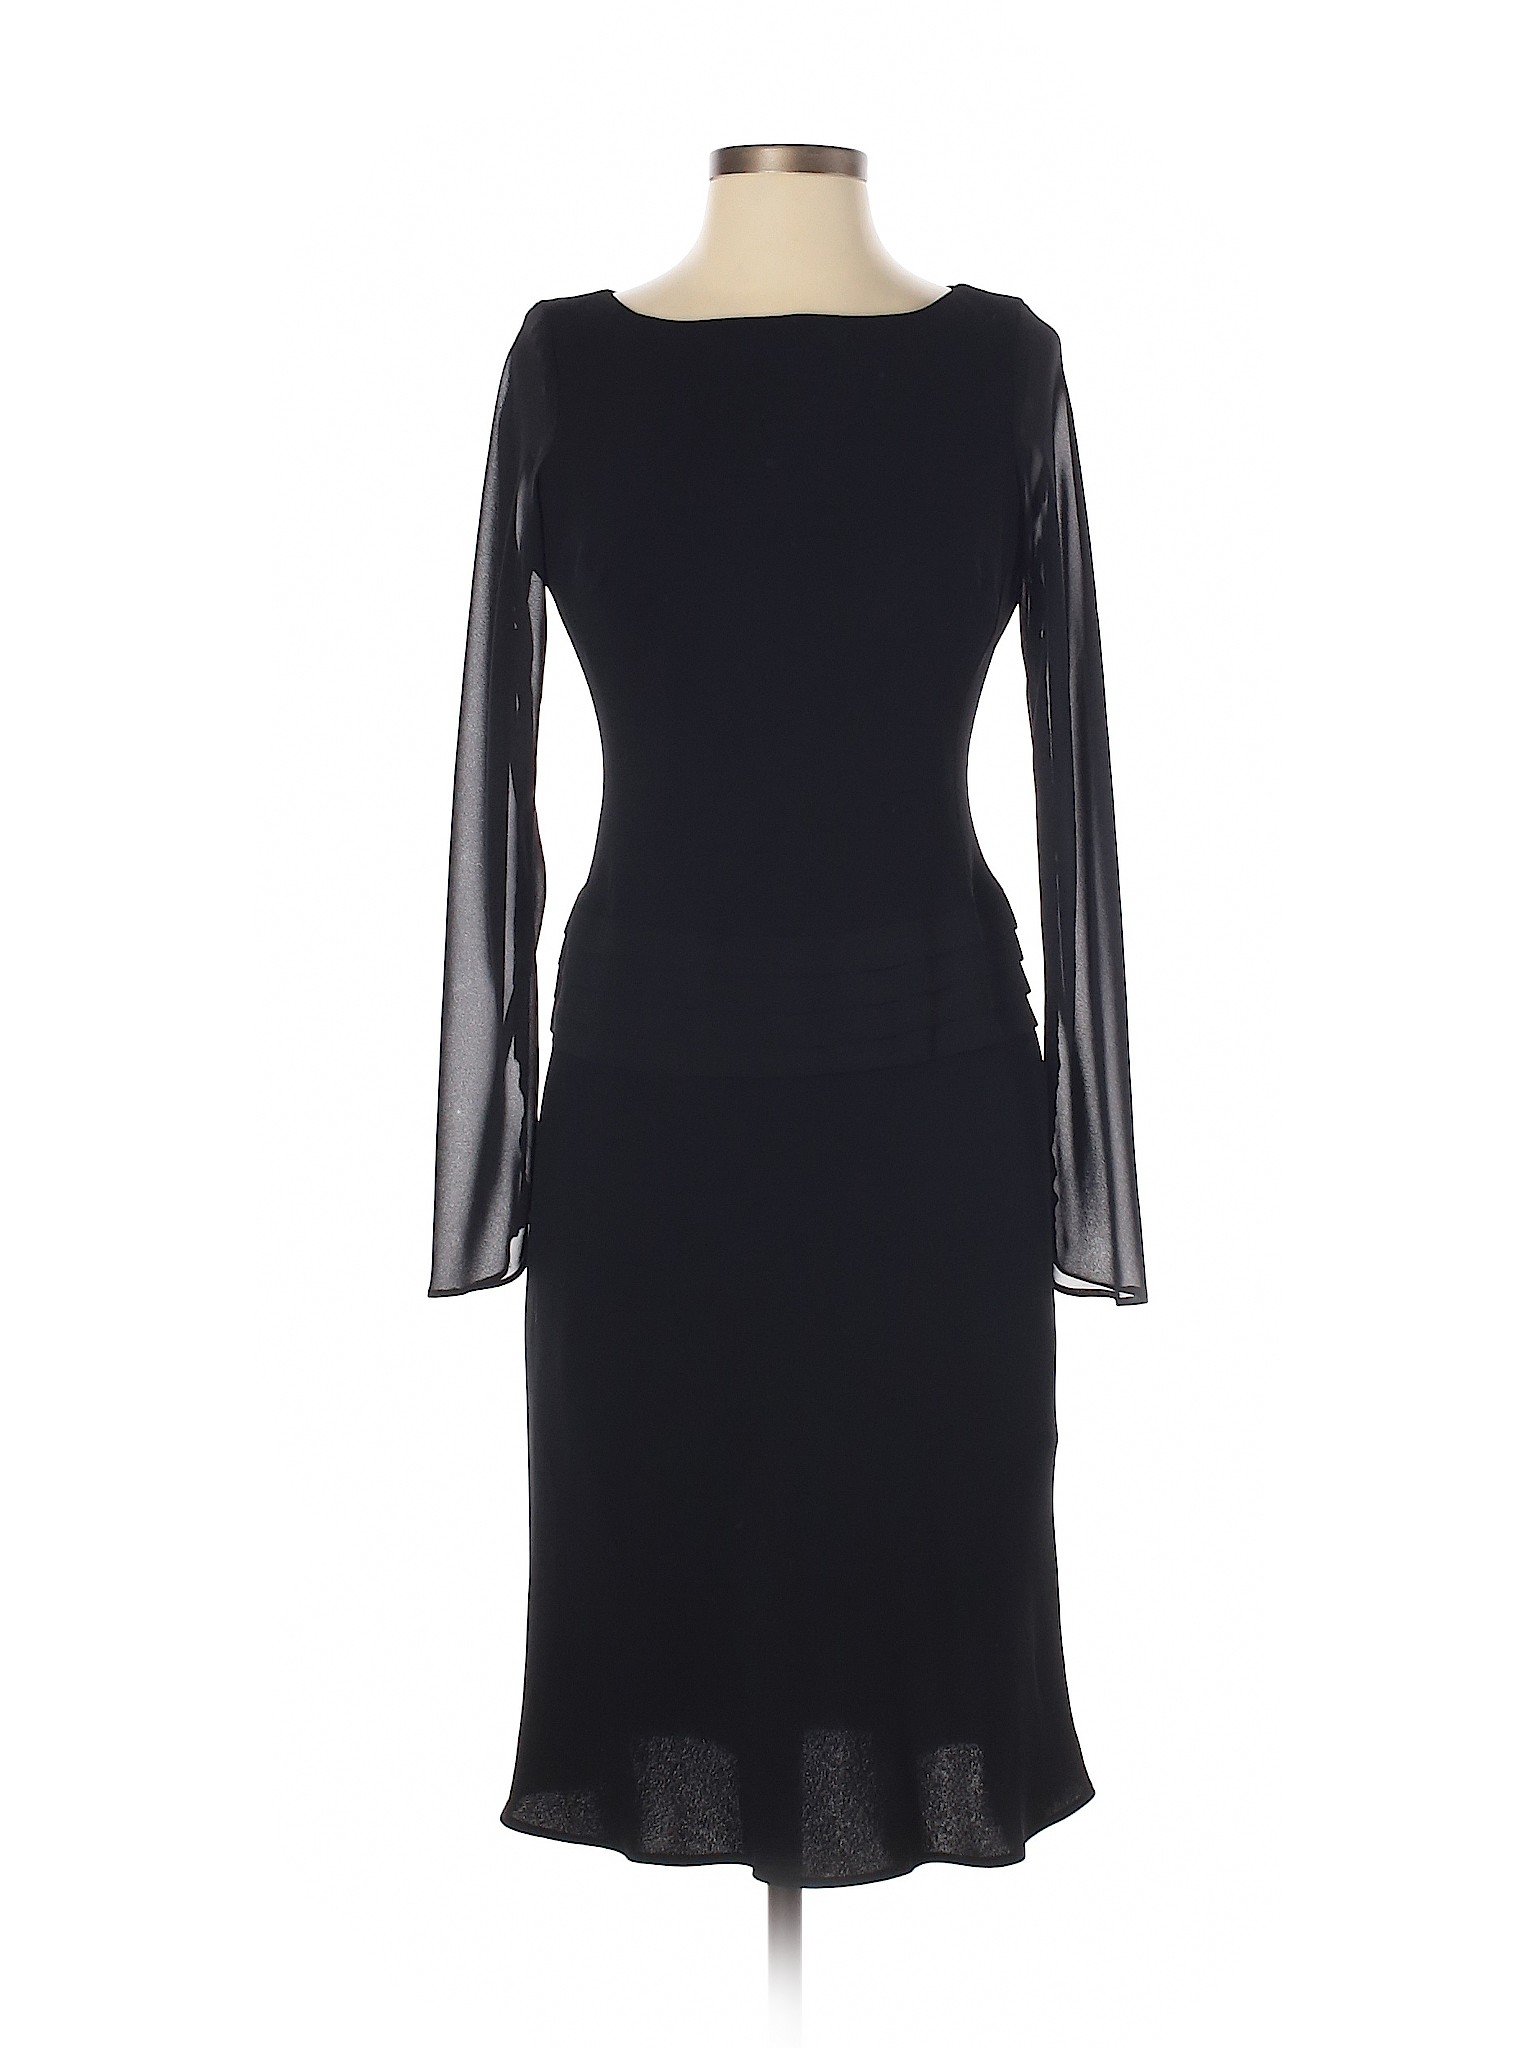 Evan Picone Women Black Casual Dress 4 | eBay